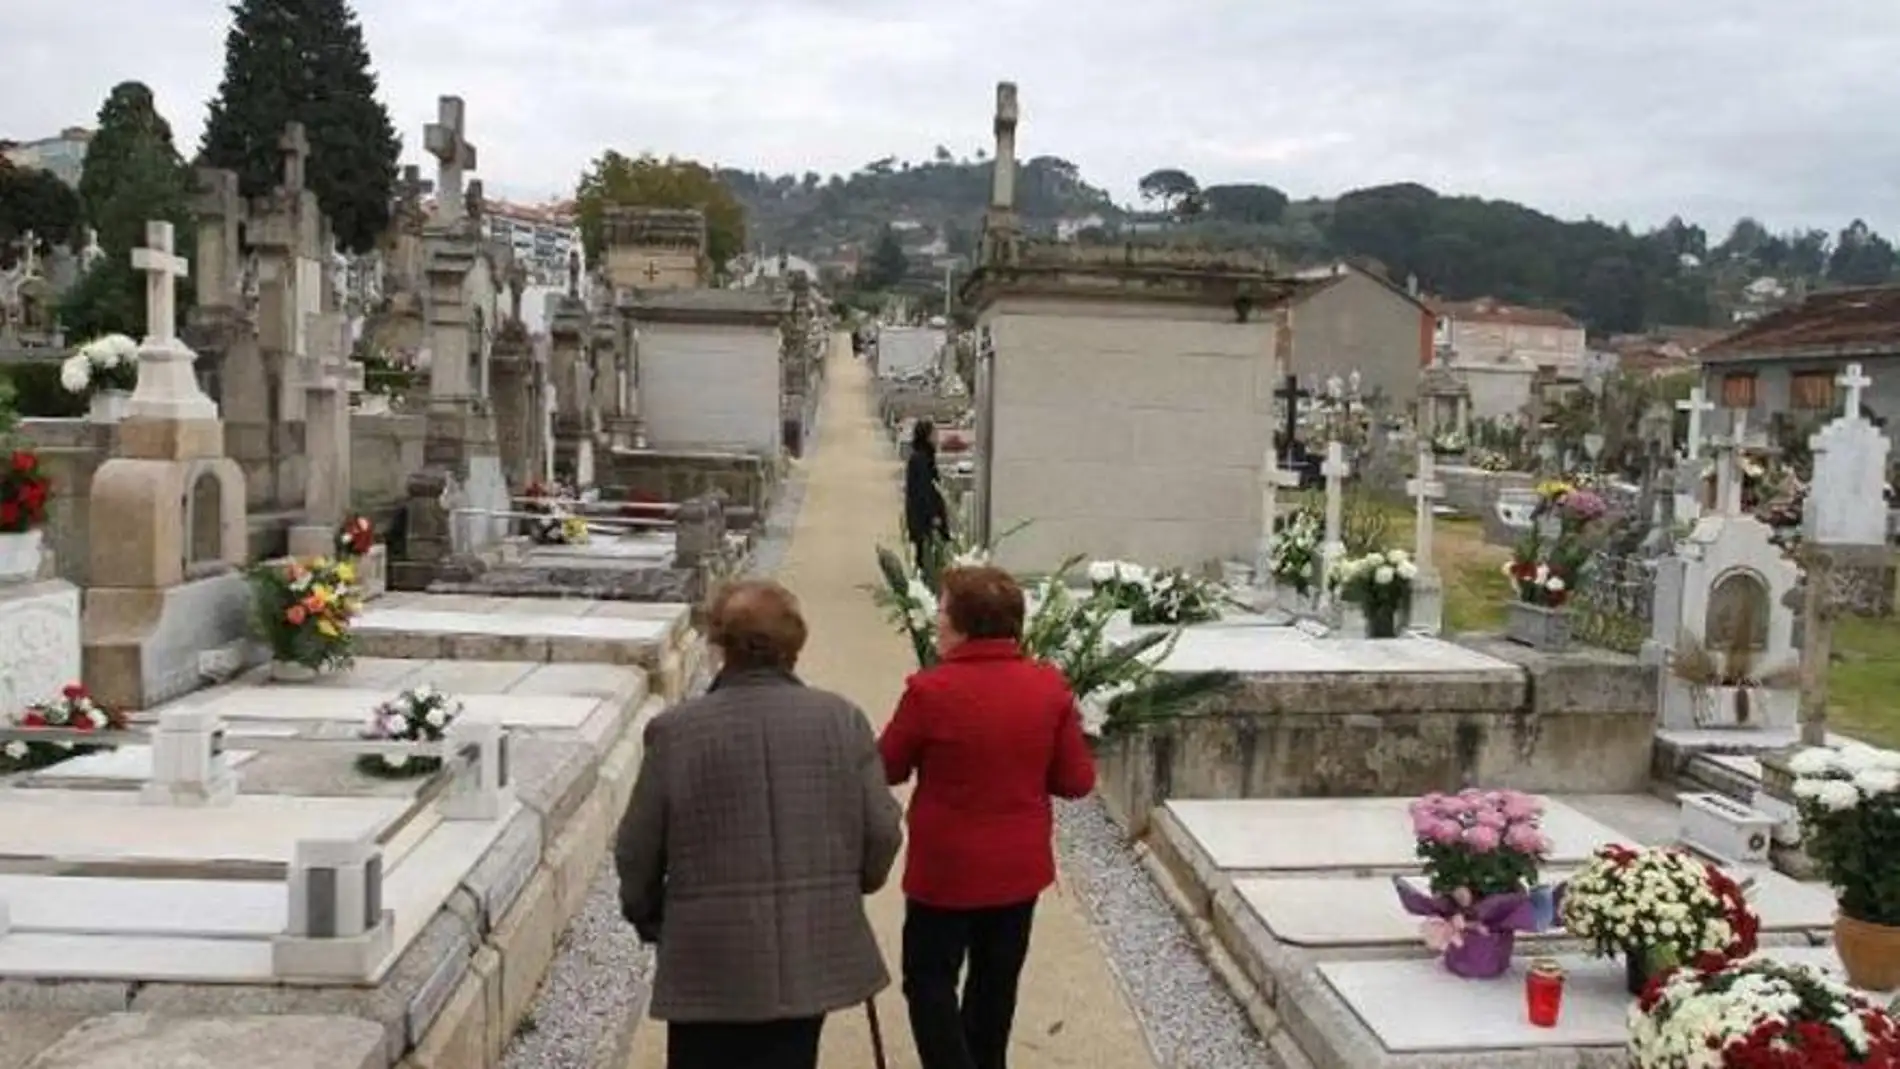 O Concello abrirá os cemiterios ininterrompidamente no puente de difuntos